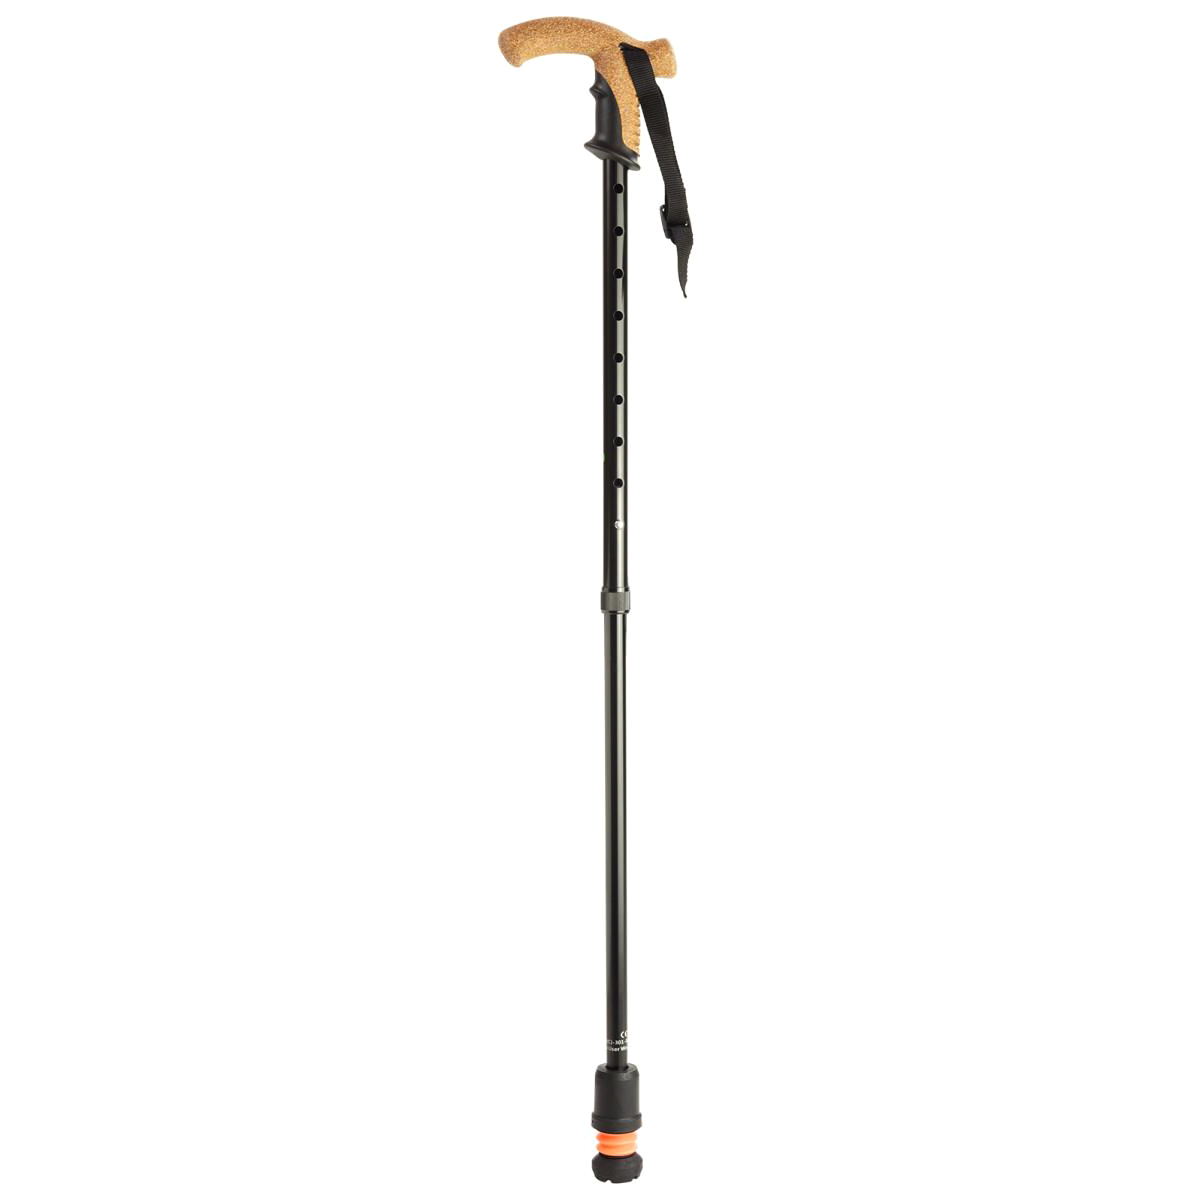 A single black Flexyfoot Premium Cork Handle Walking Stick